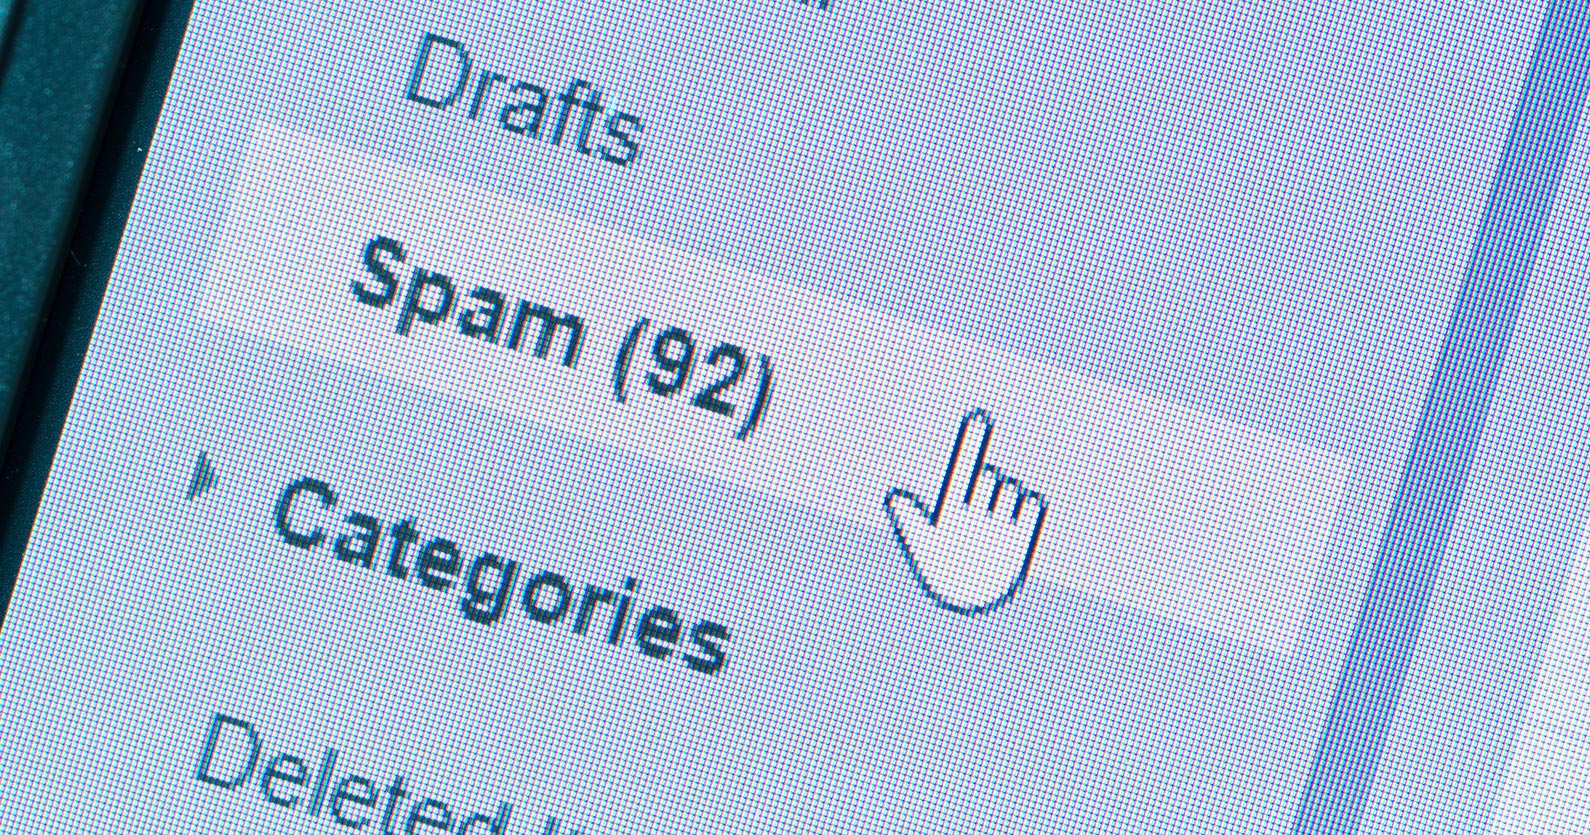 Benefits of Sending Fewer Emails